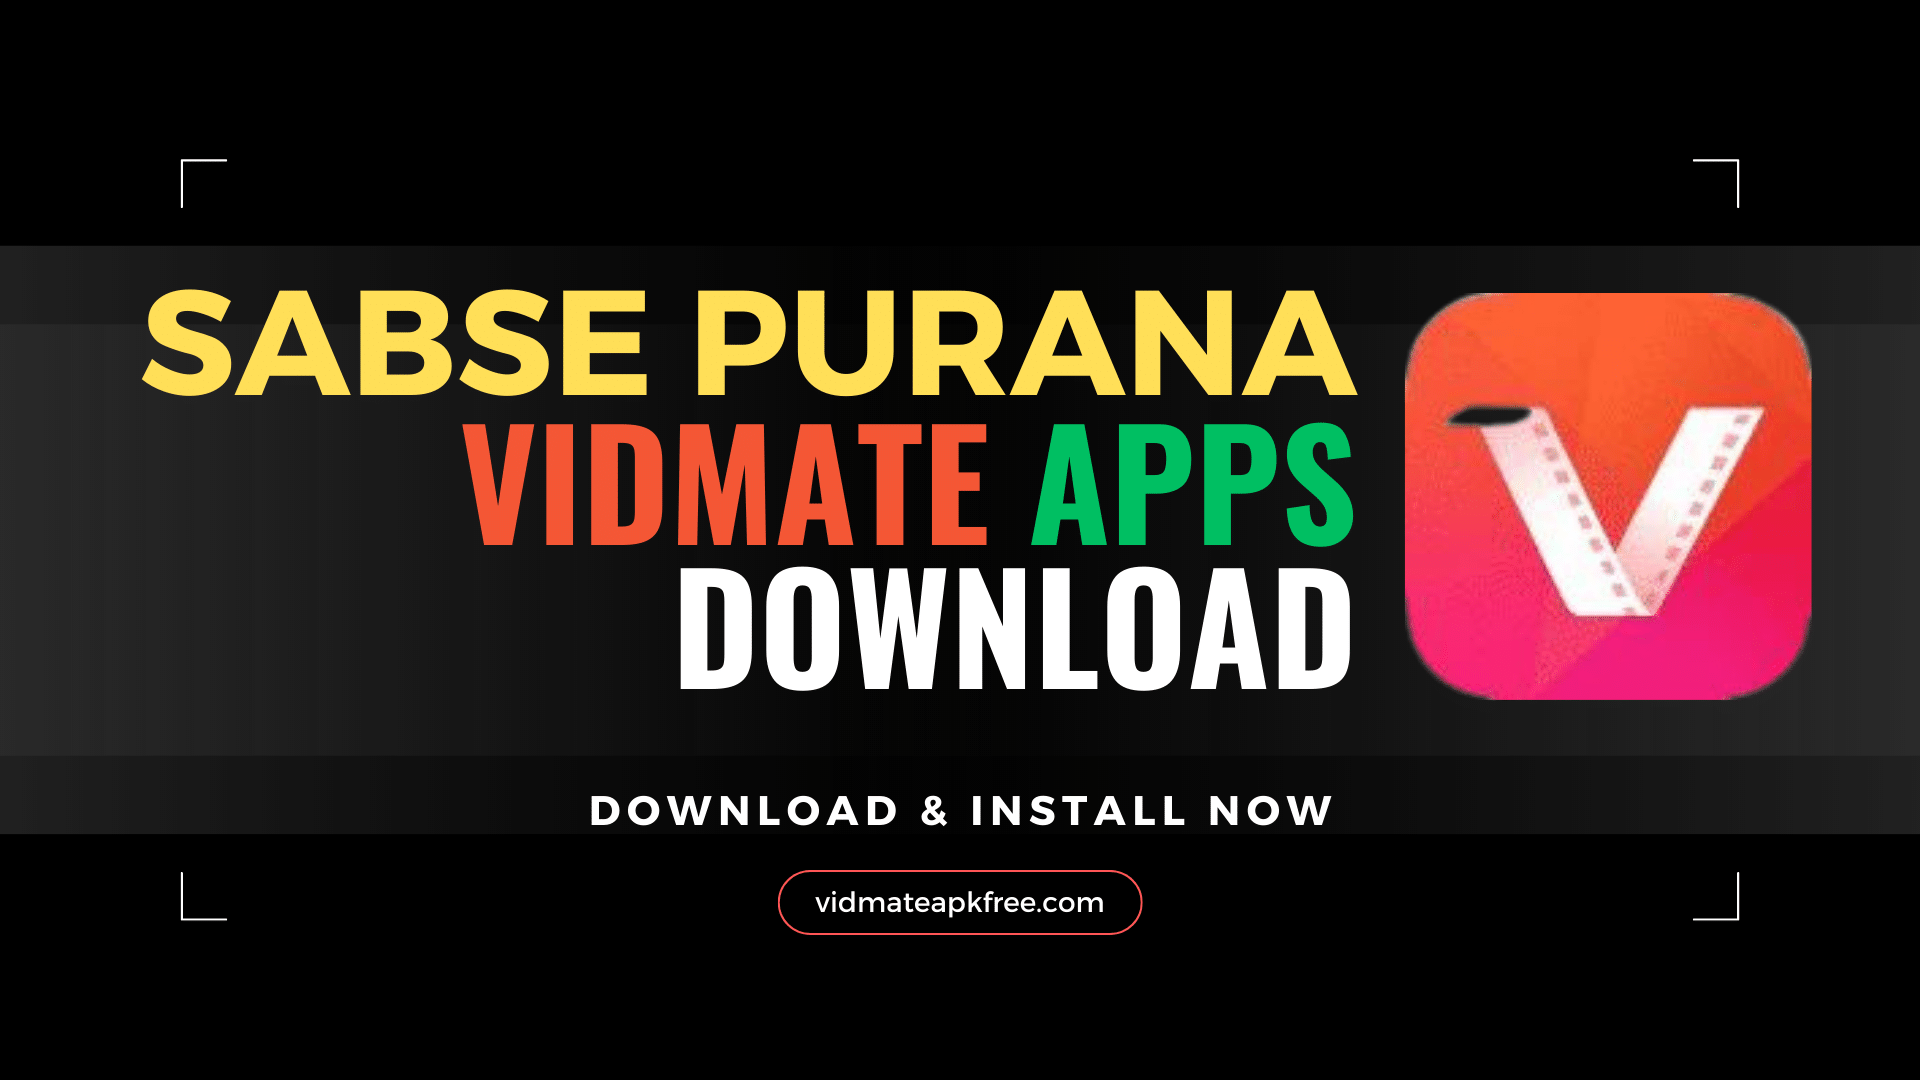 Sabse Purana VidMate Apps Download Karna Hai